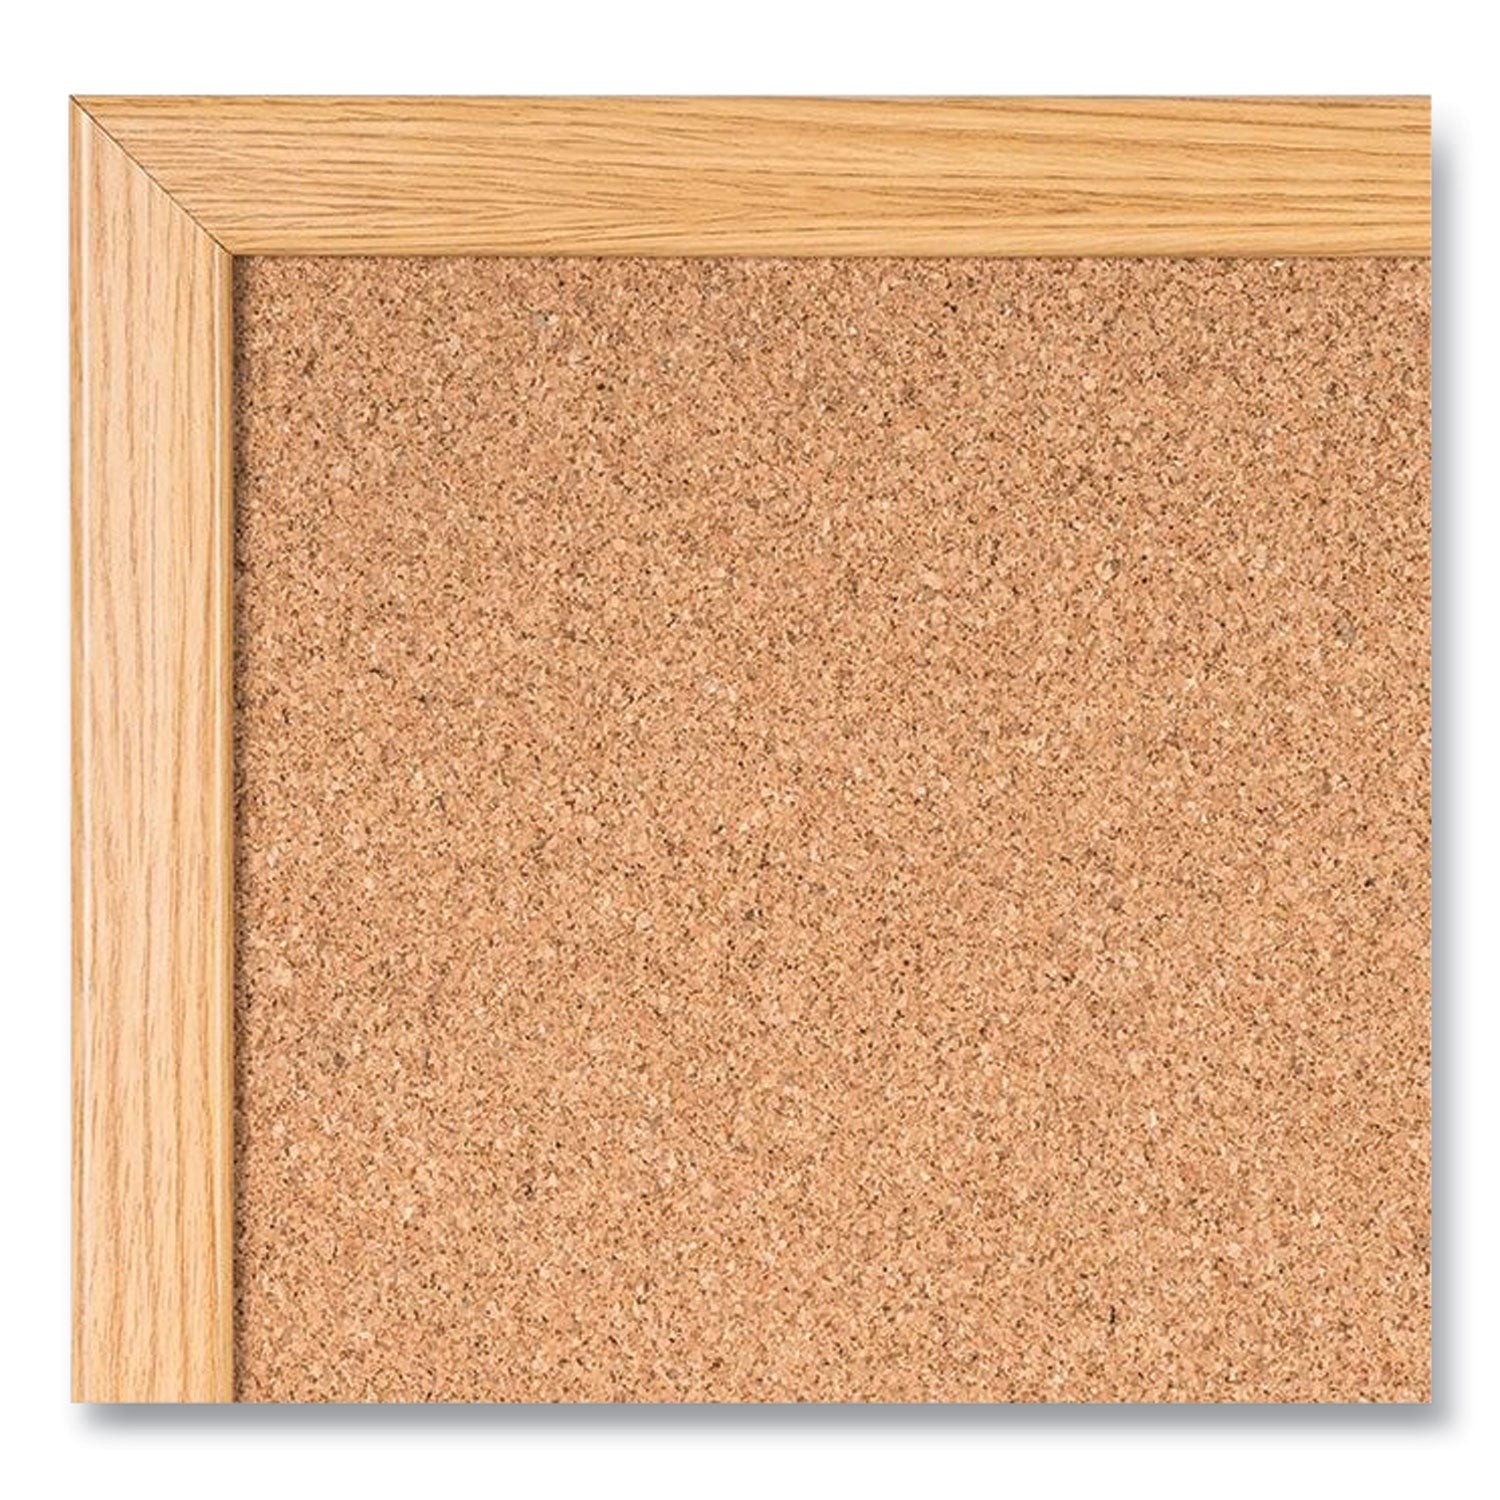 value-cork-bulletin-board-with-oak-frame-24-x-36-brown-surface-oak-frame_bvcmc070014231 - 8